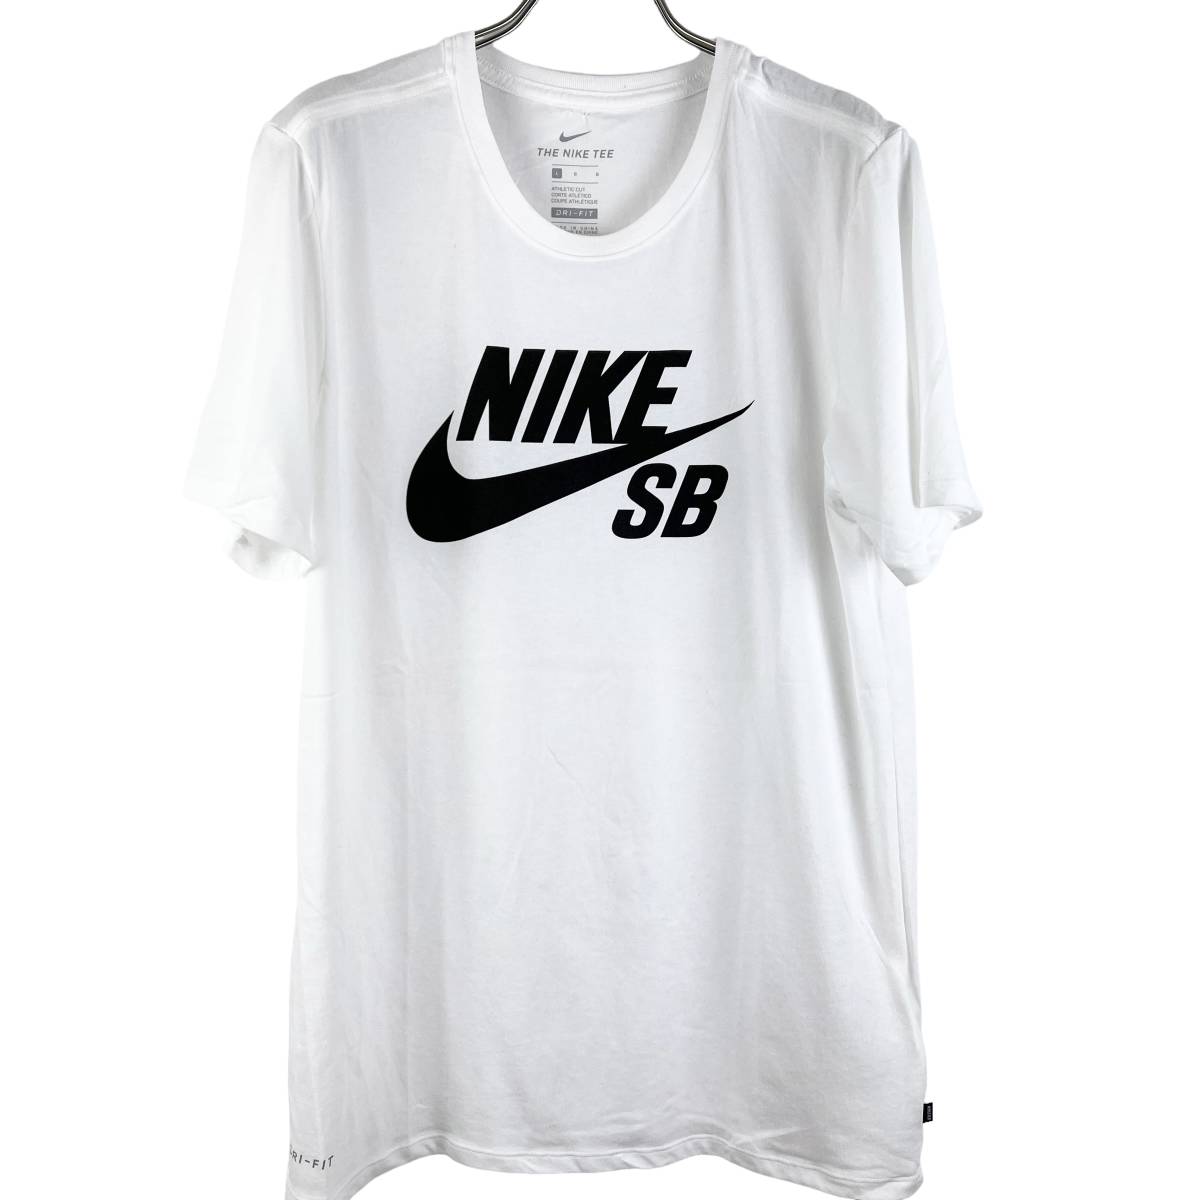 NIKE(ナイキ) SB DRI-FIT Series T Shirt (white)